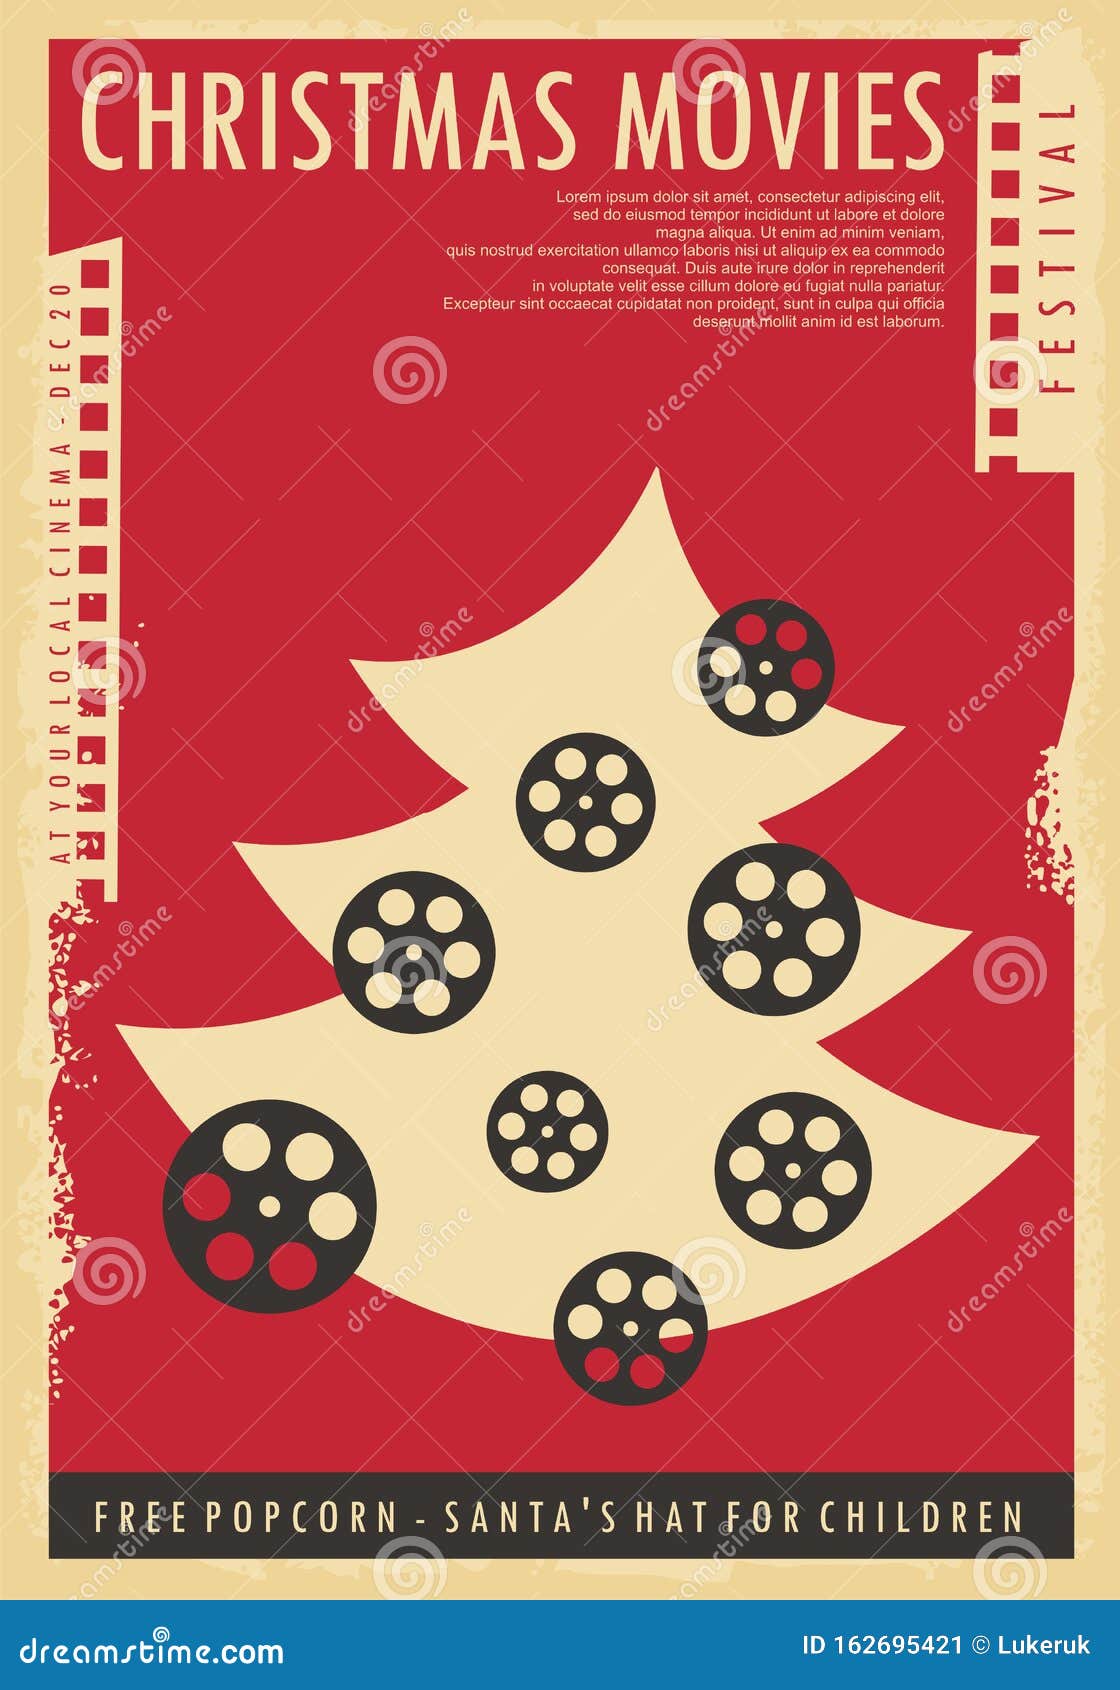 christmas movies festival conceptual poster 